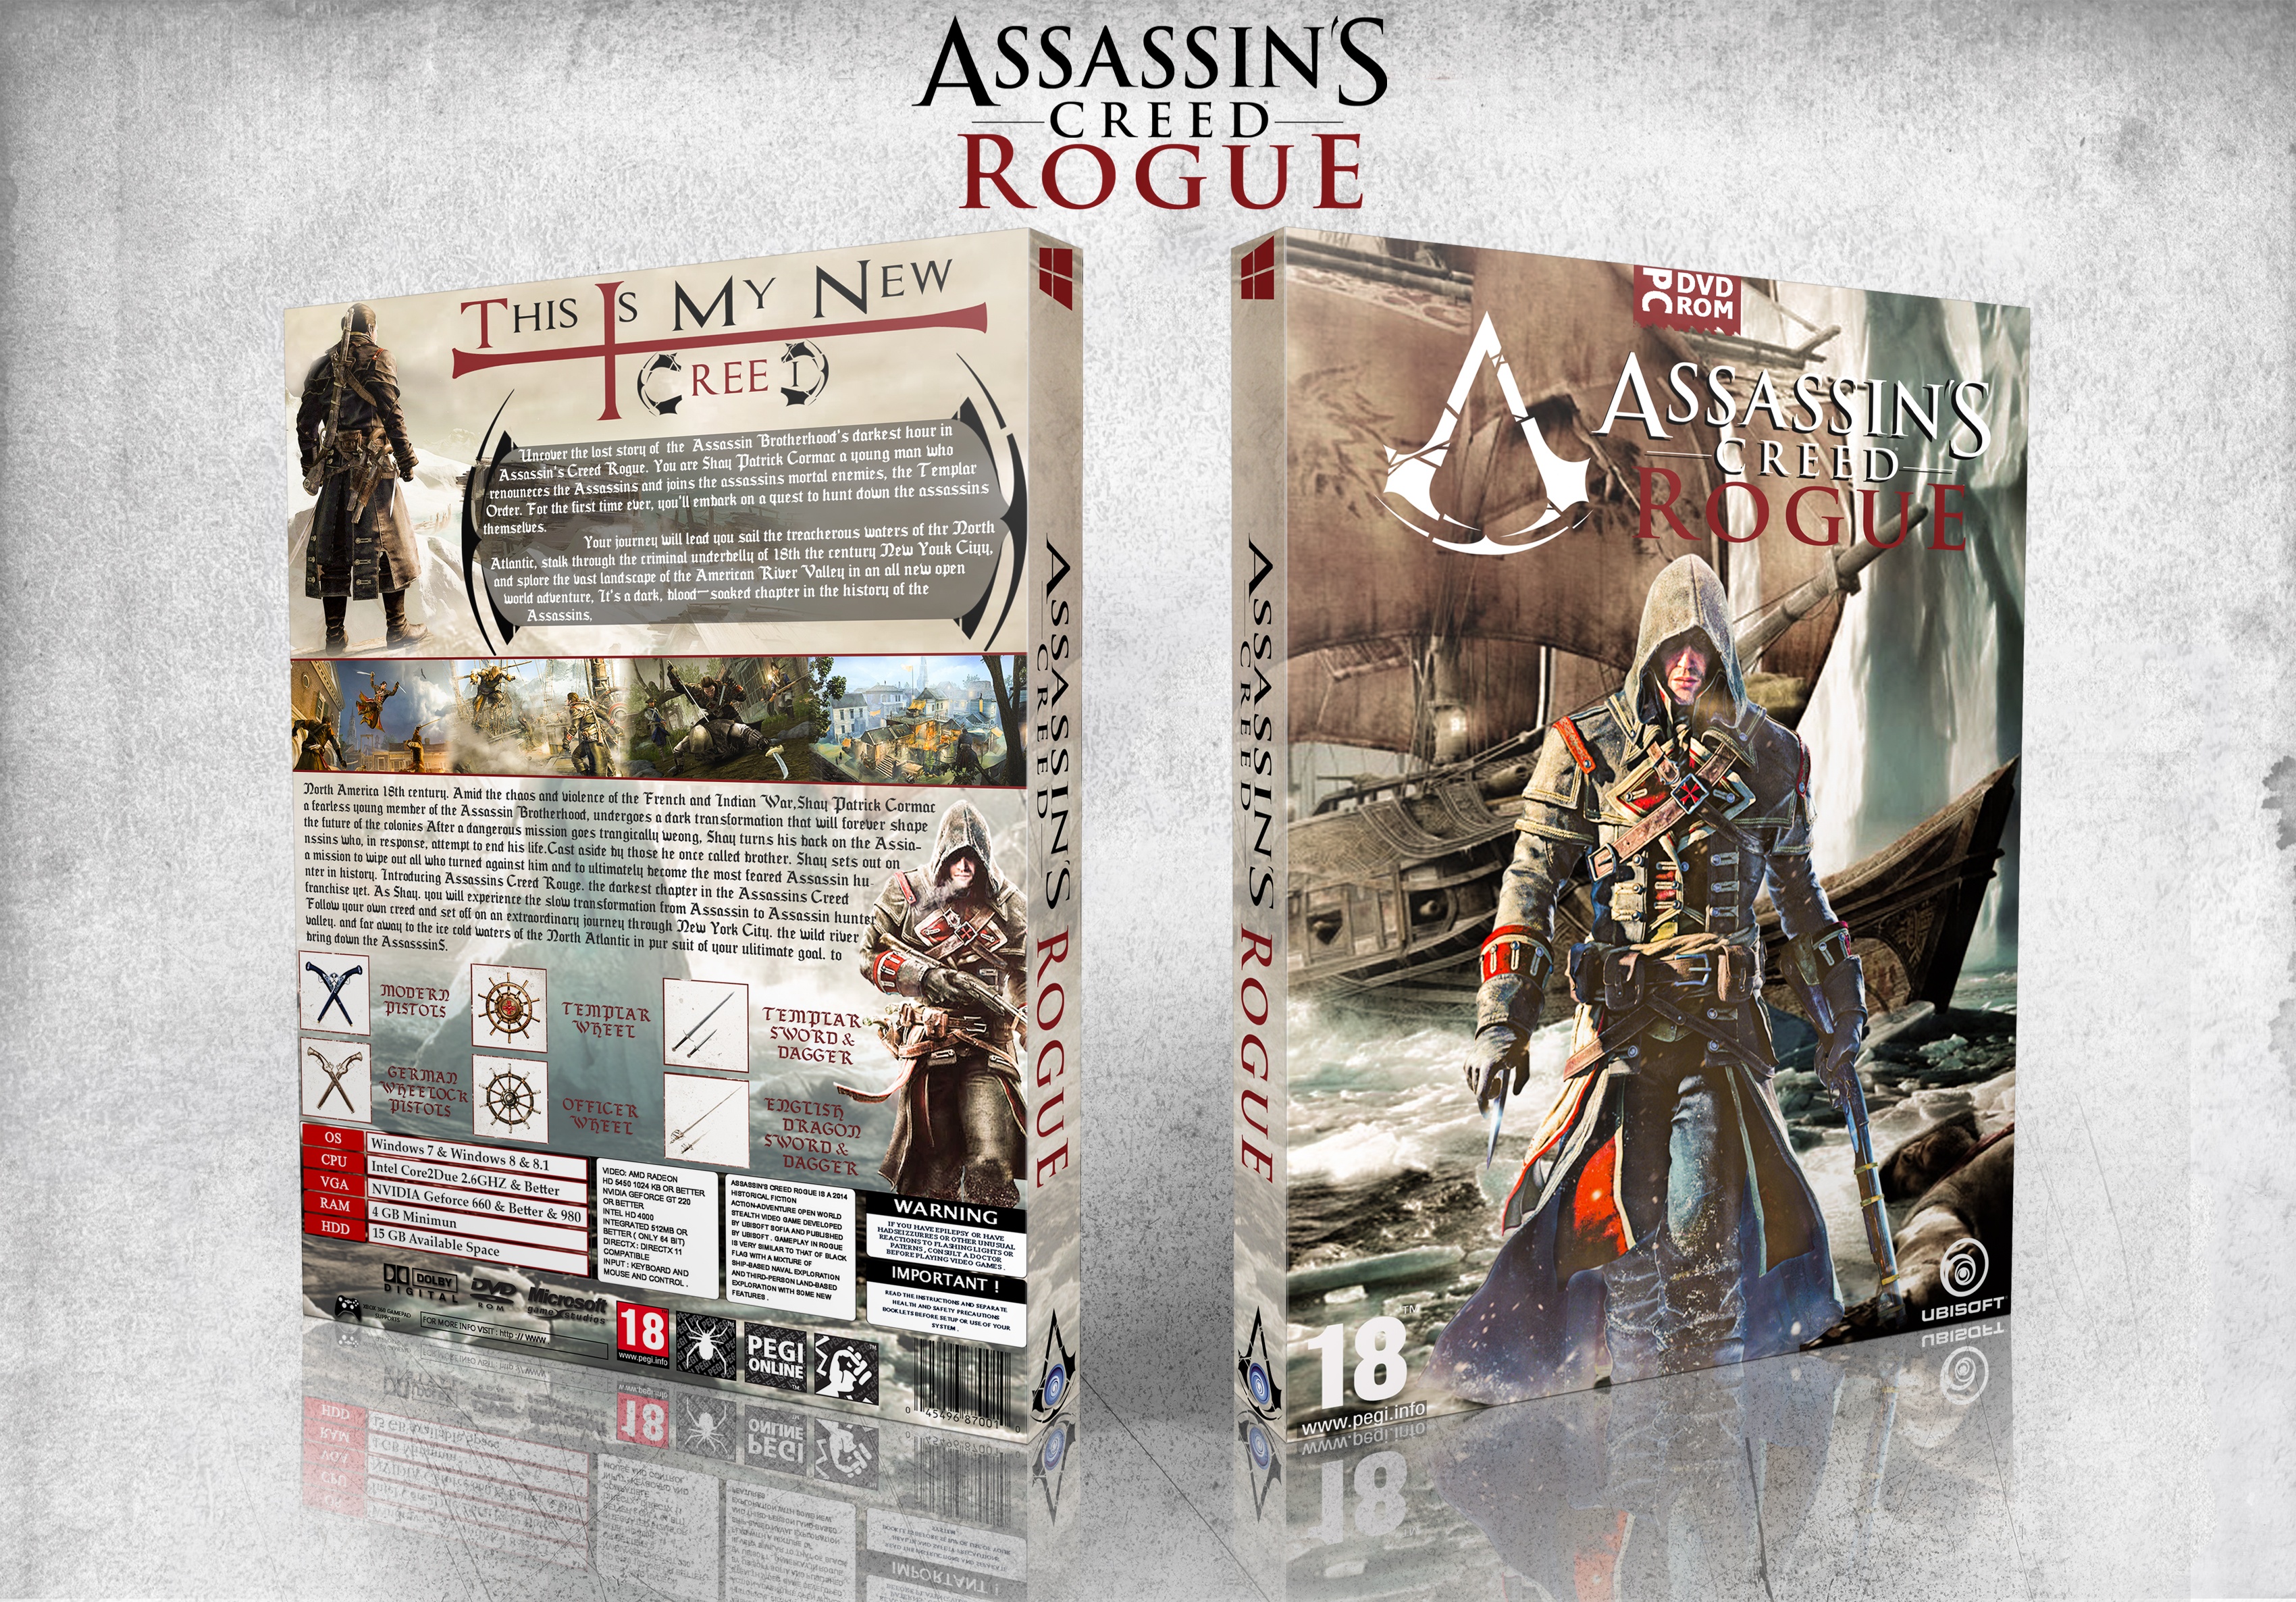 Assassin's Creed Rogue box cover